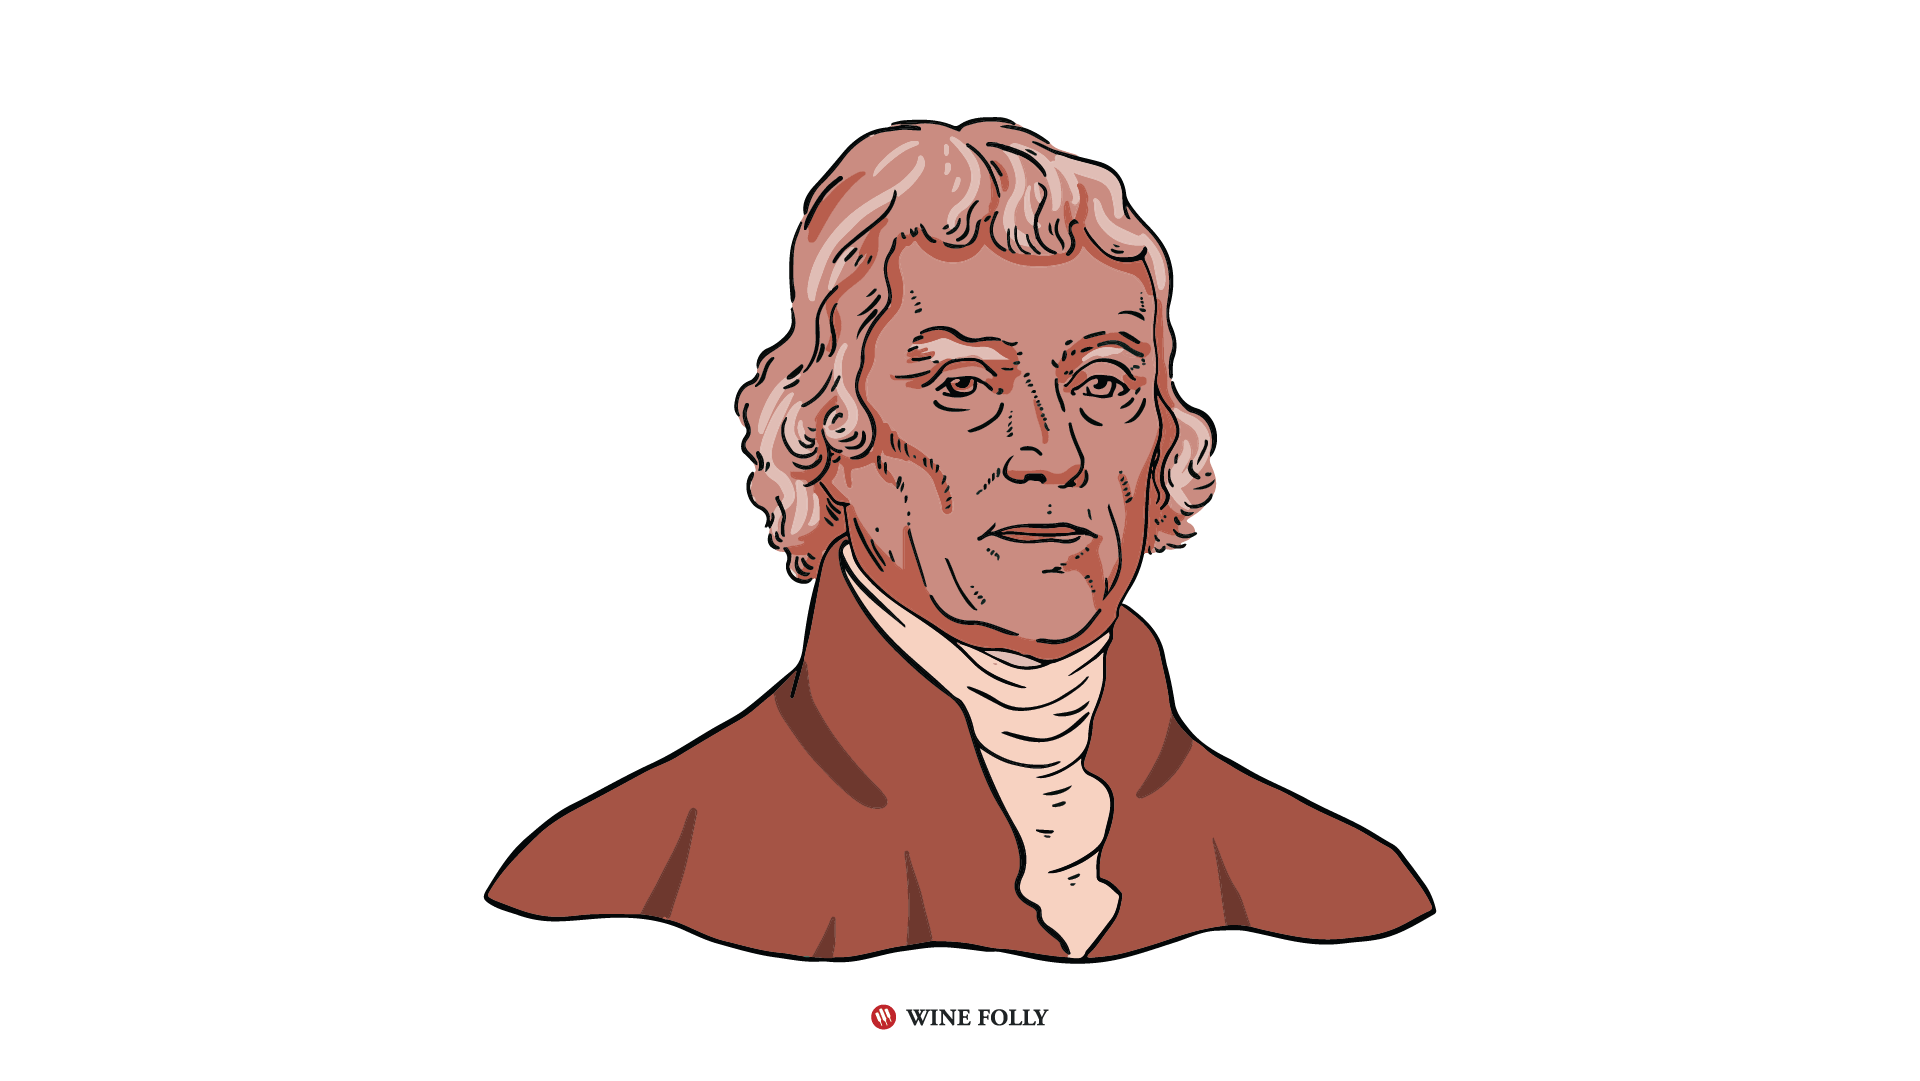 The British, Marsala, and Thomas Jefferson